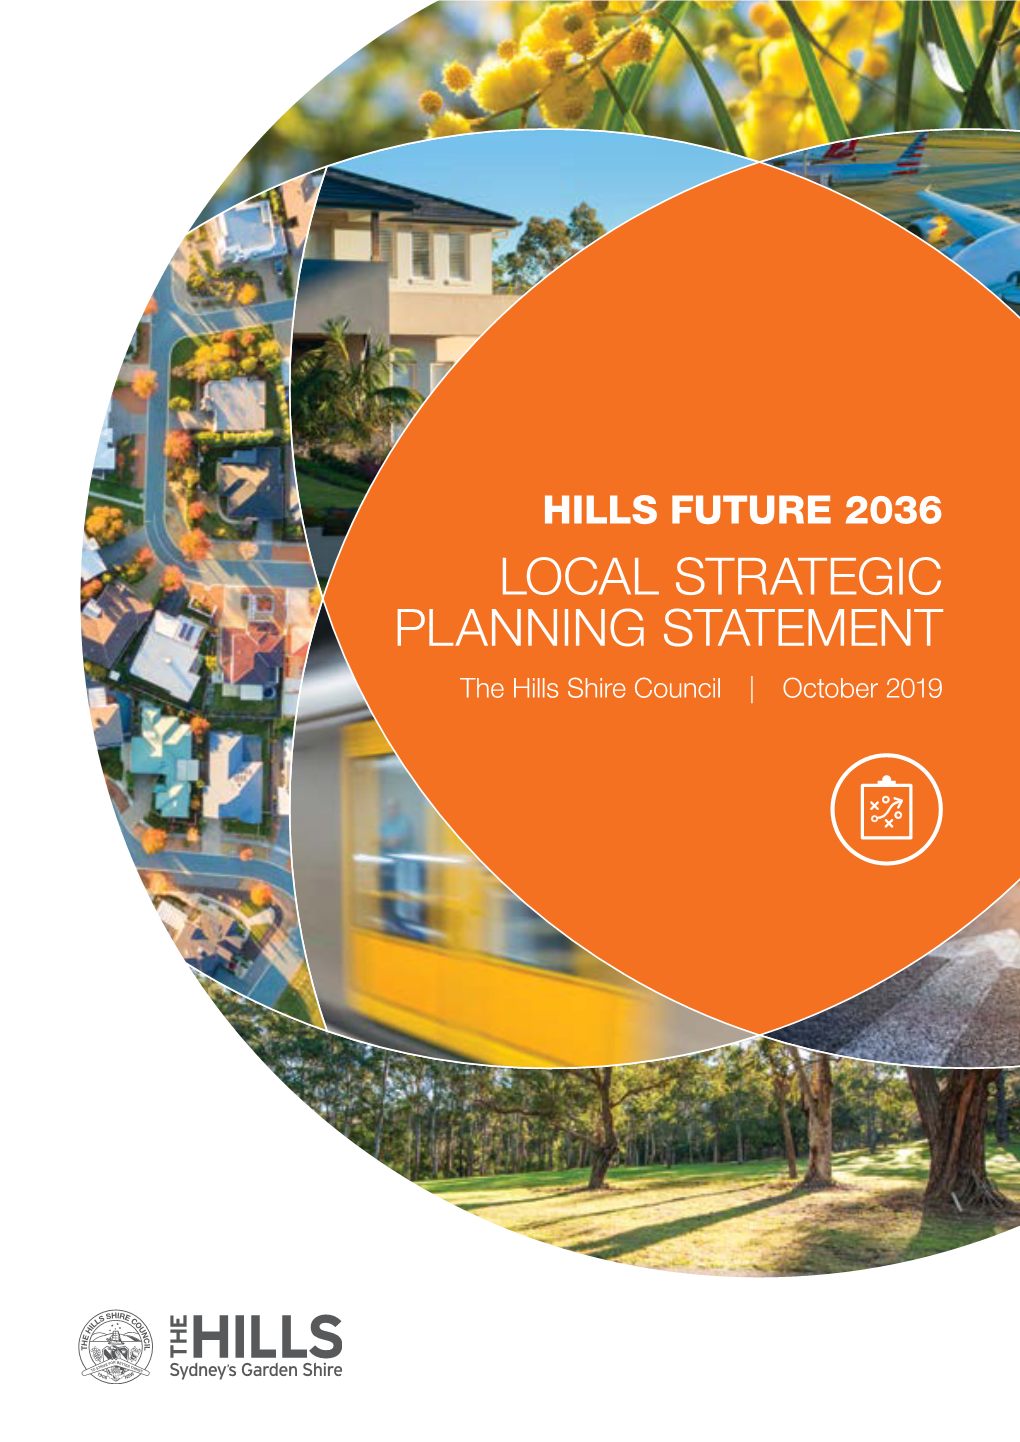 Hills Future 2036: Local Strategic Planning Statement